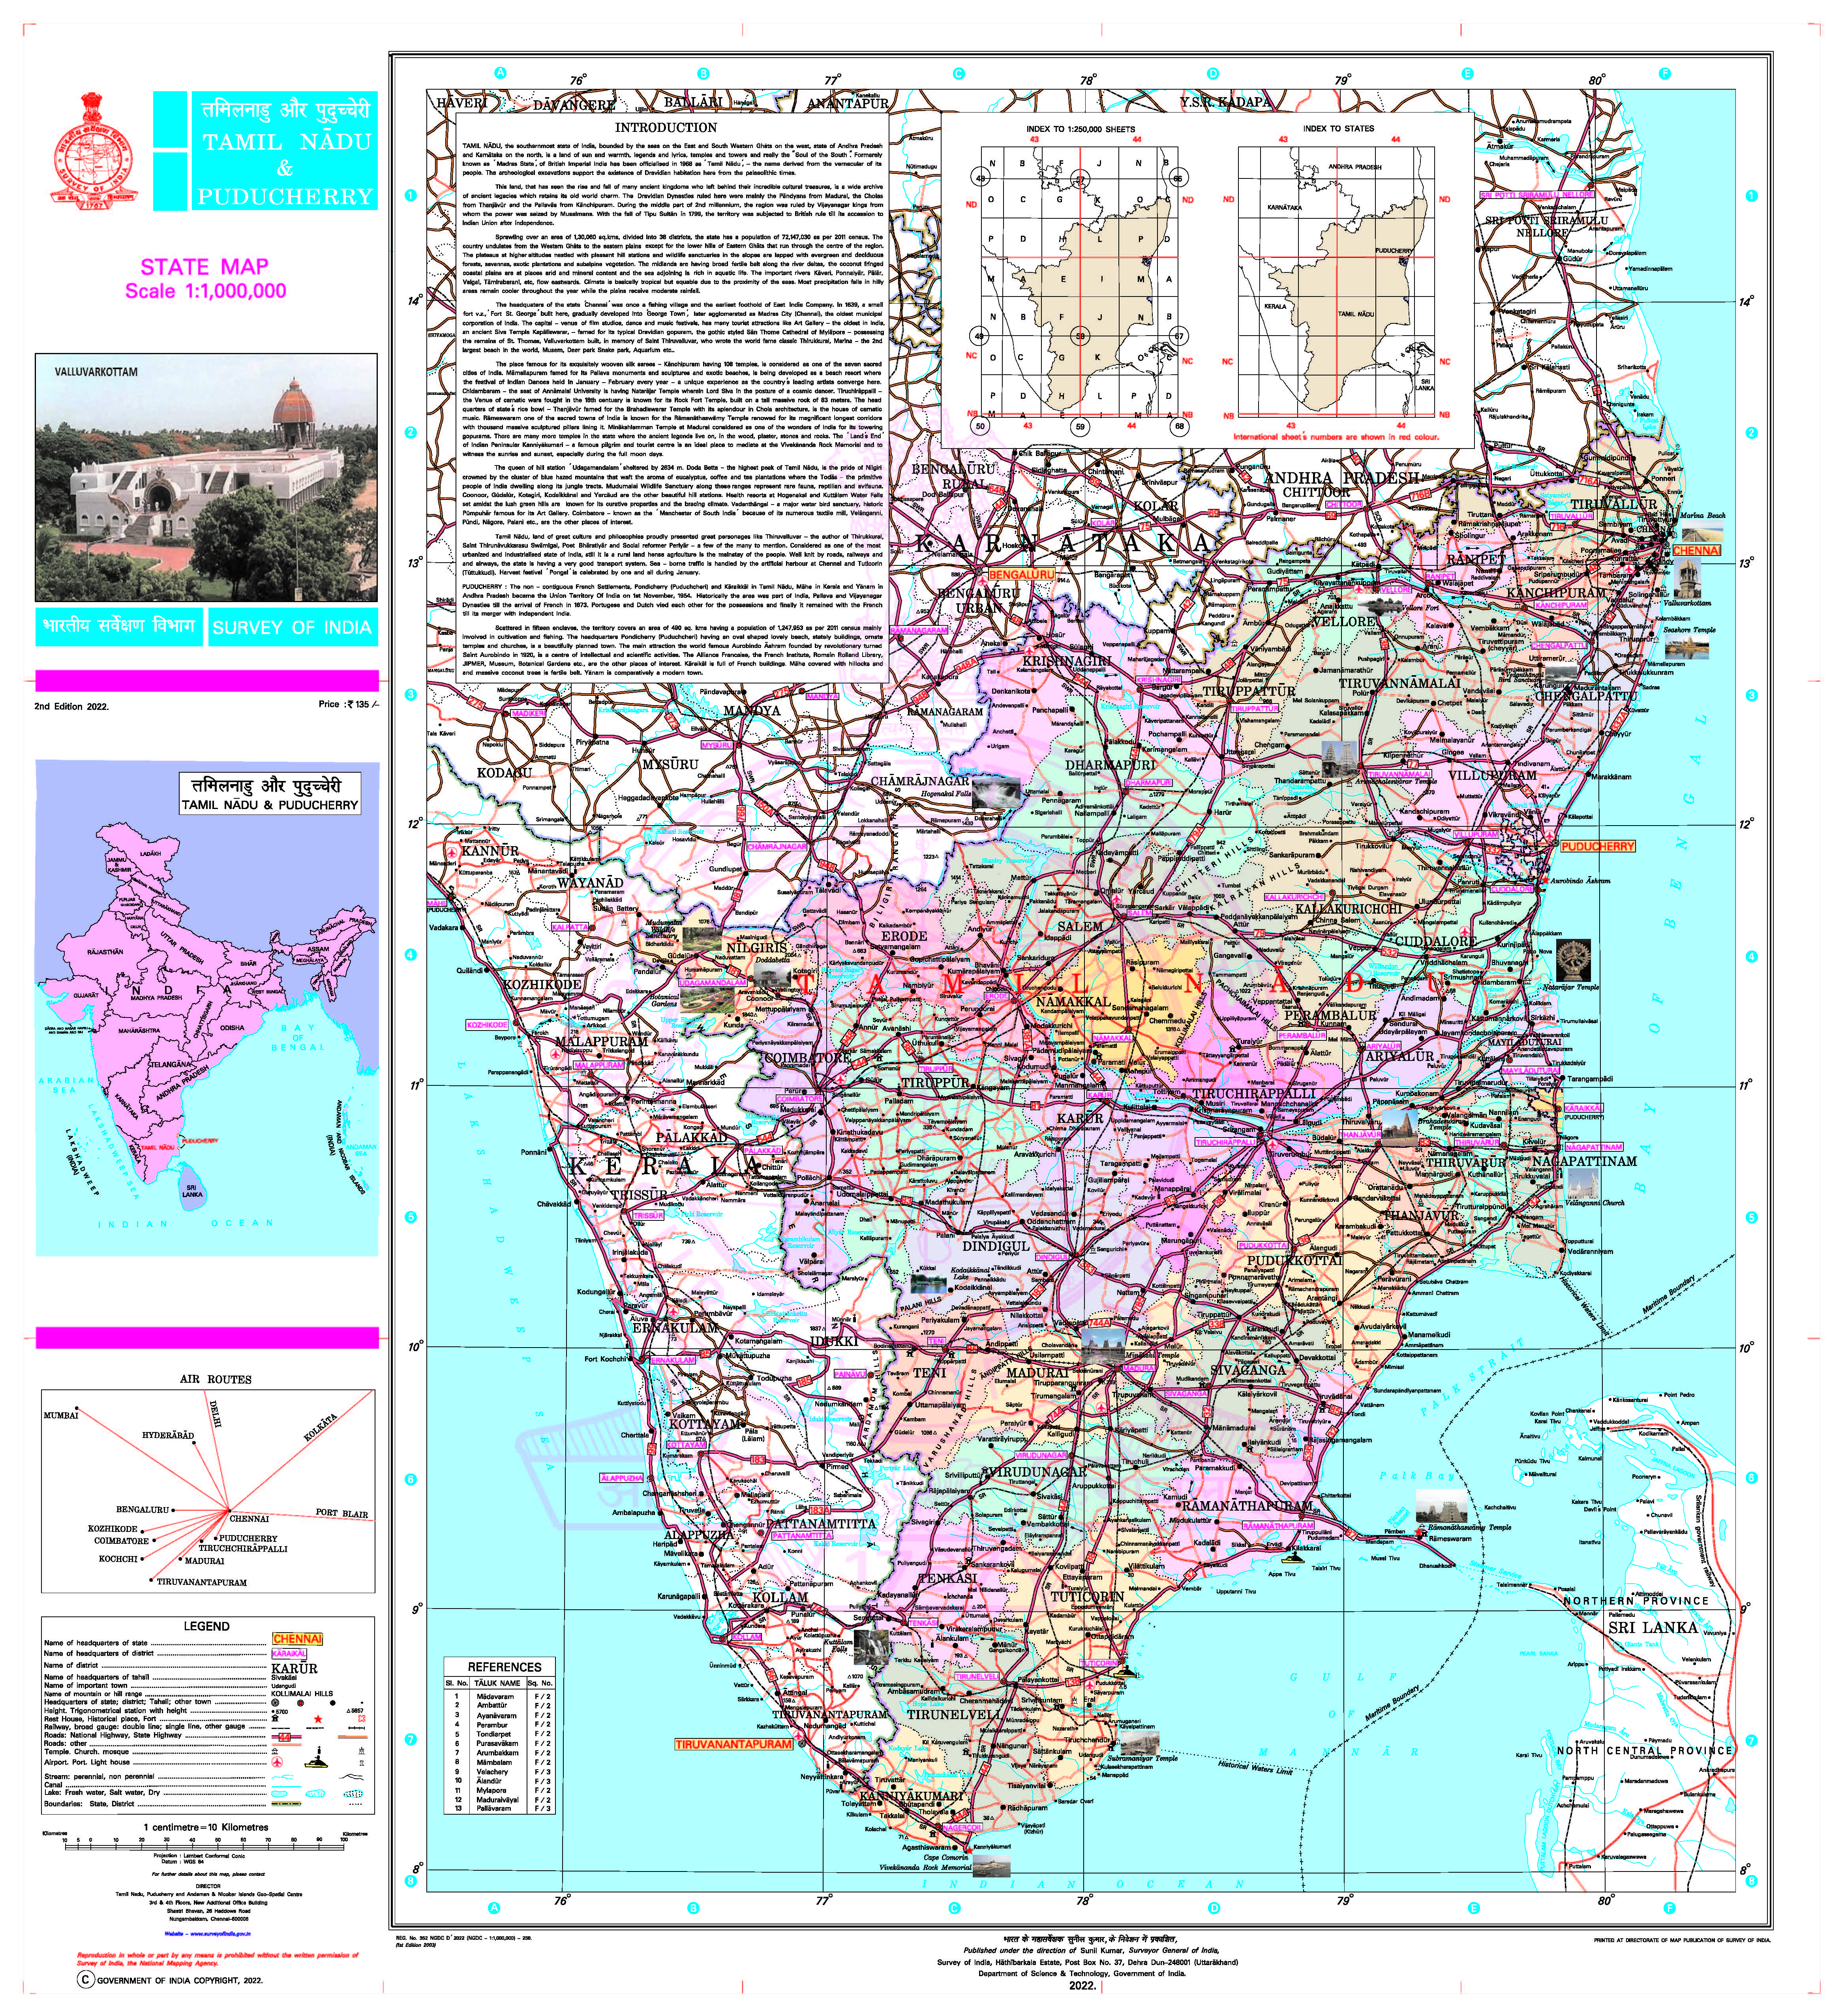 tamil nadu south india map